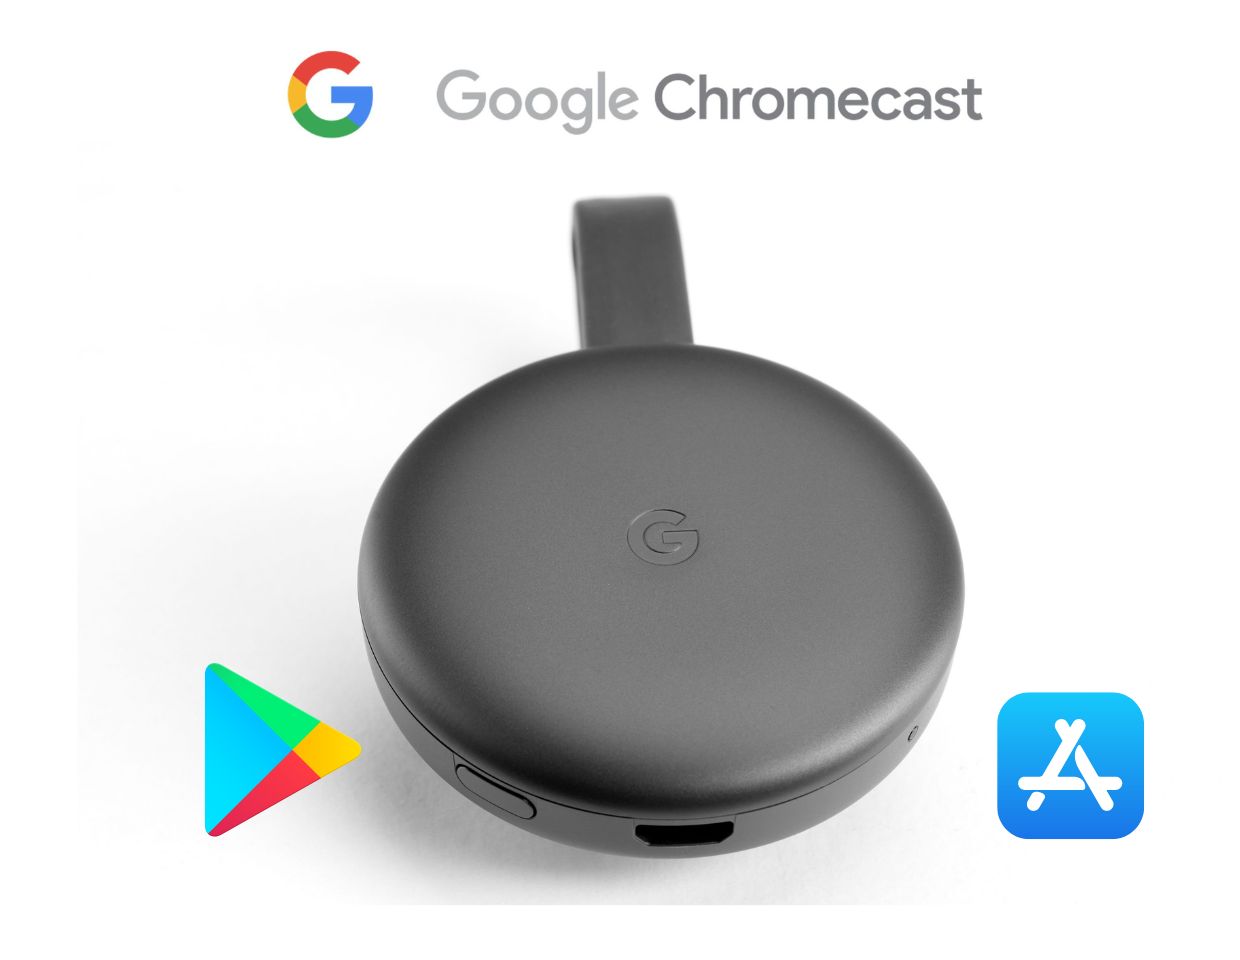 Apps Work With Chromecast